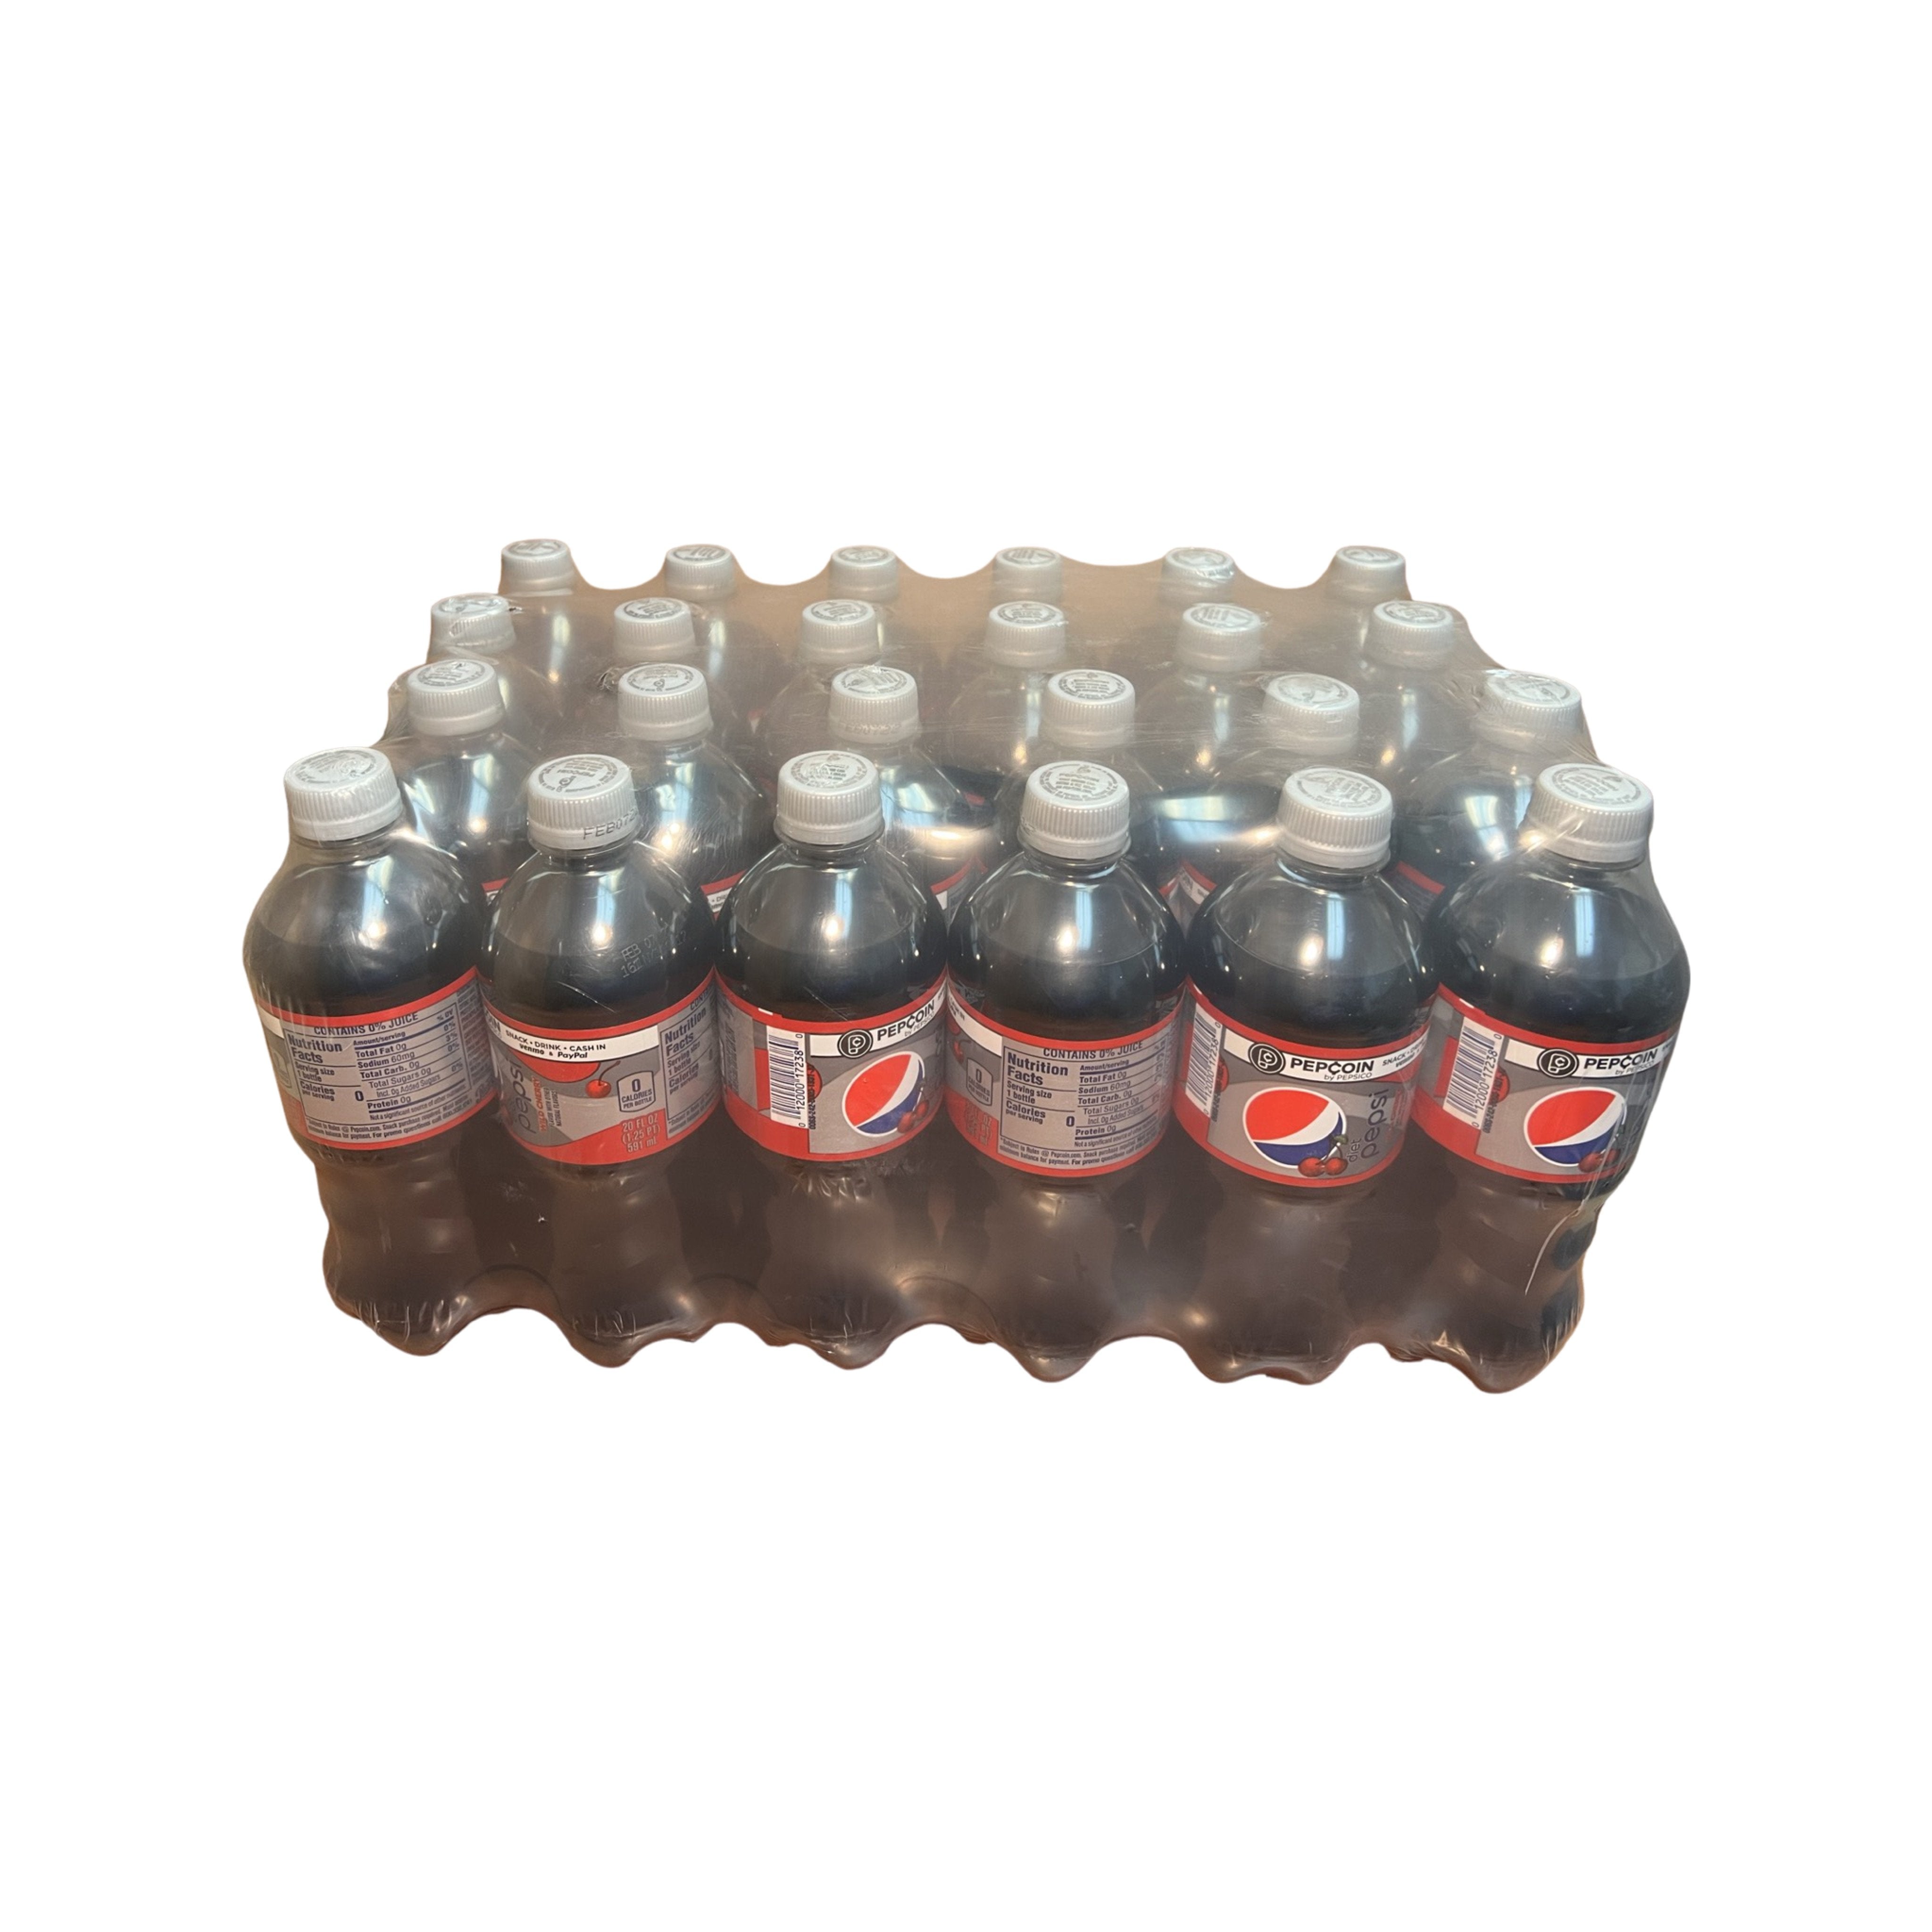 Pepsi Wild Cherry Soda Pop, 12 fl oz, 24 Pack Cans